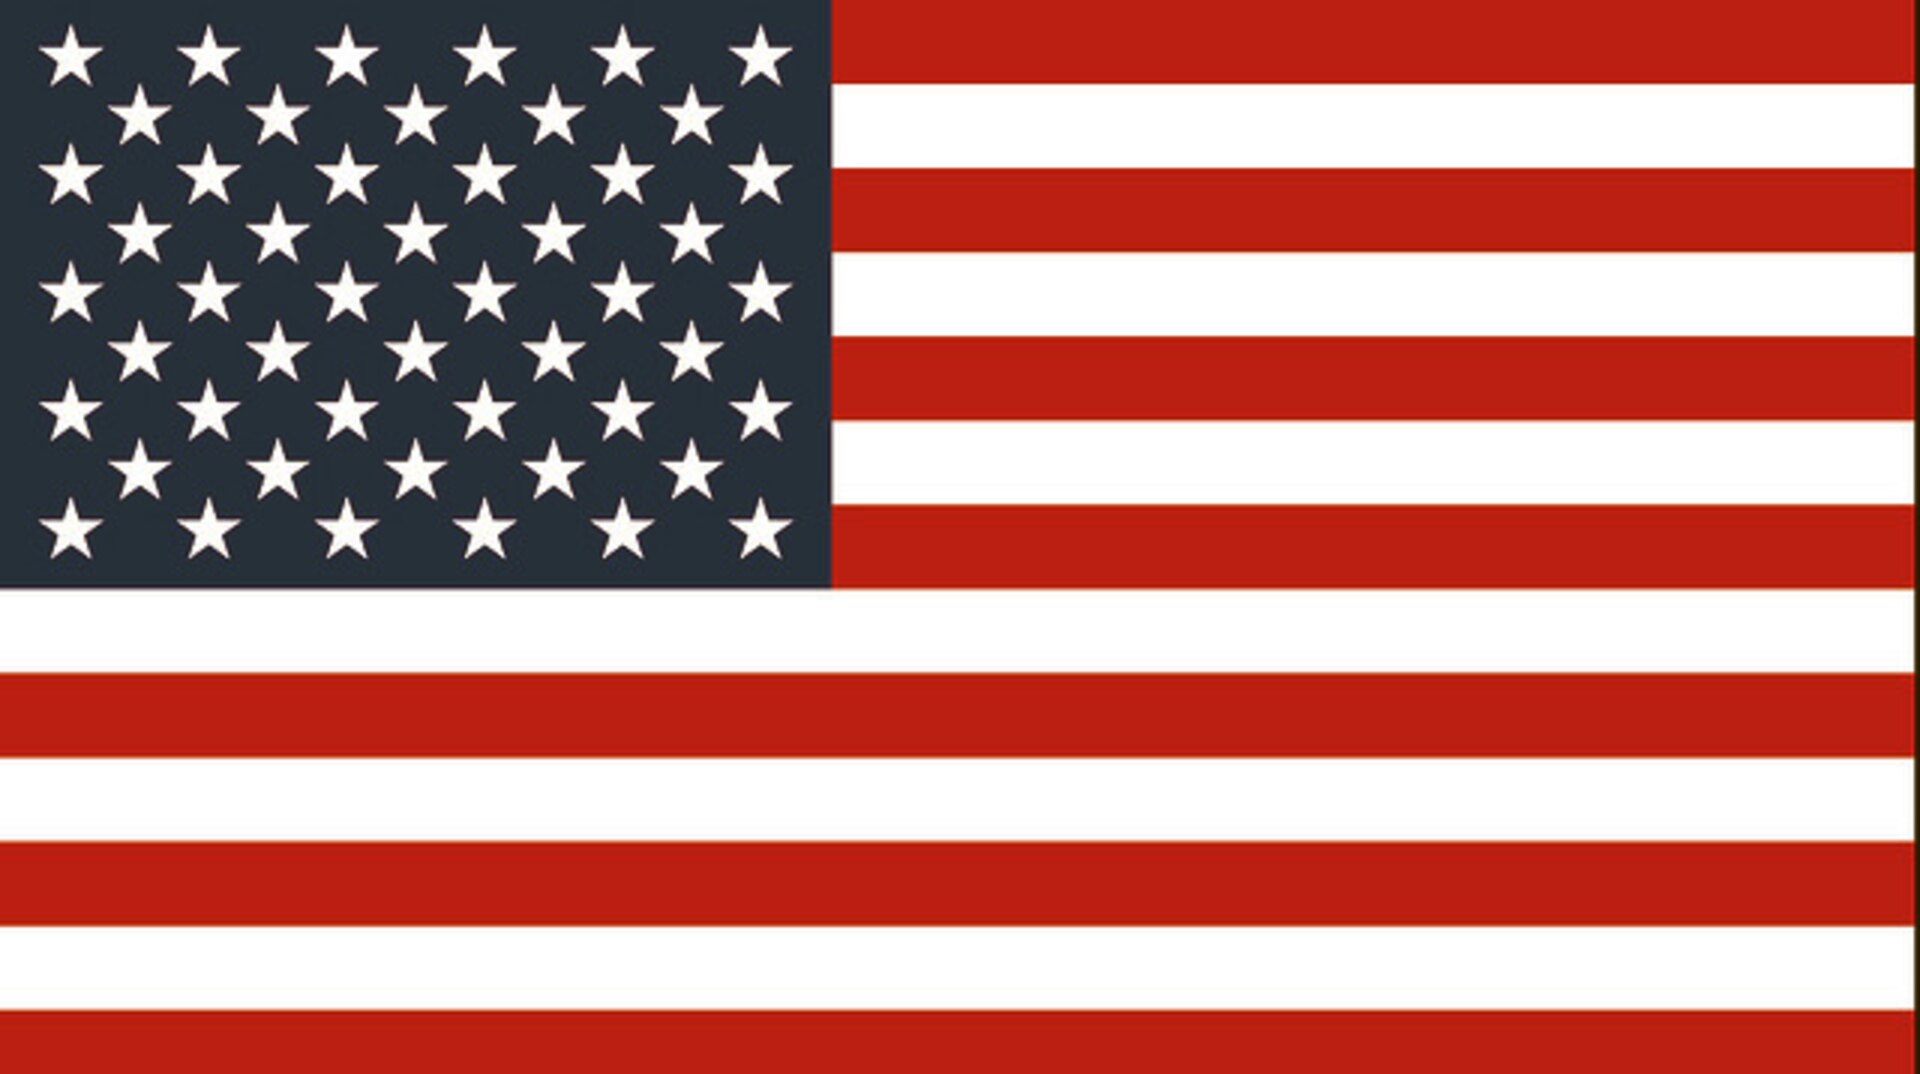 U.S. Flag.